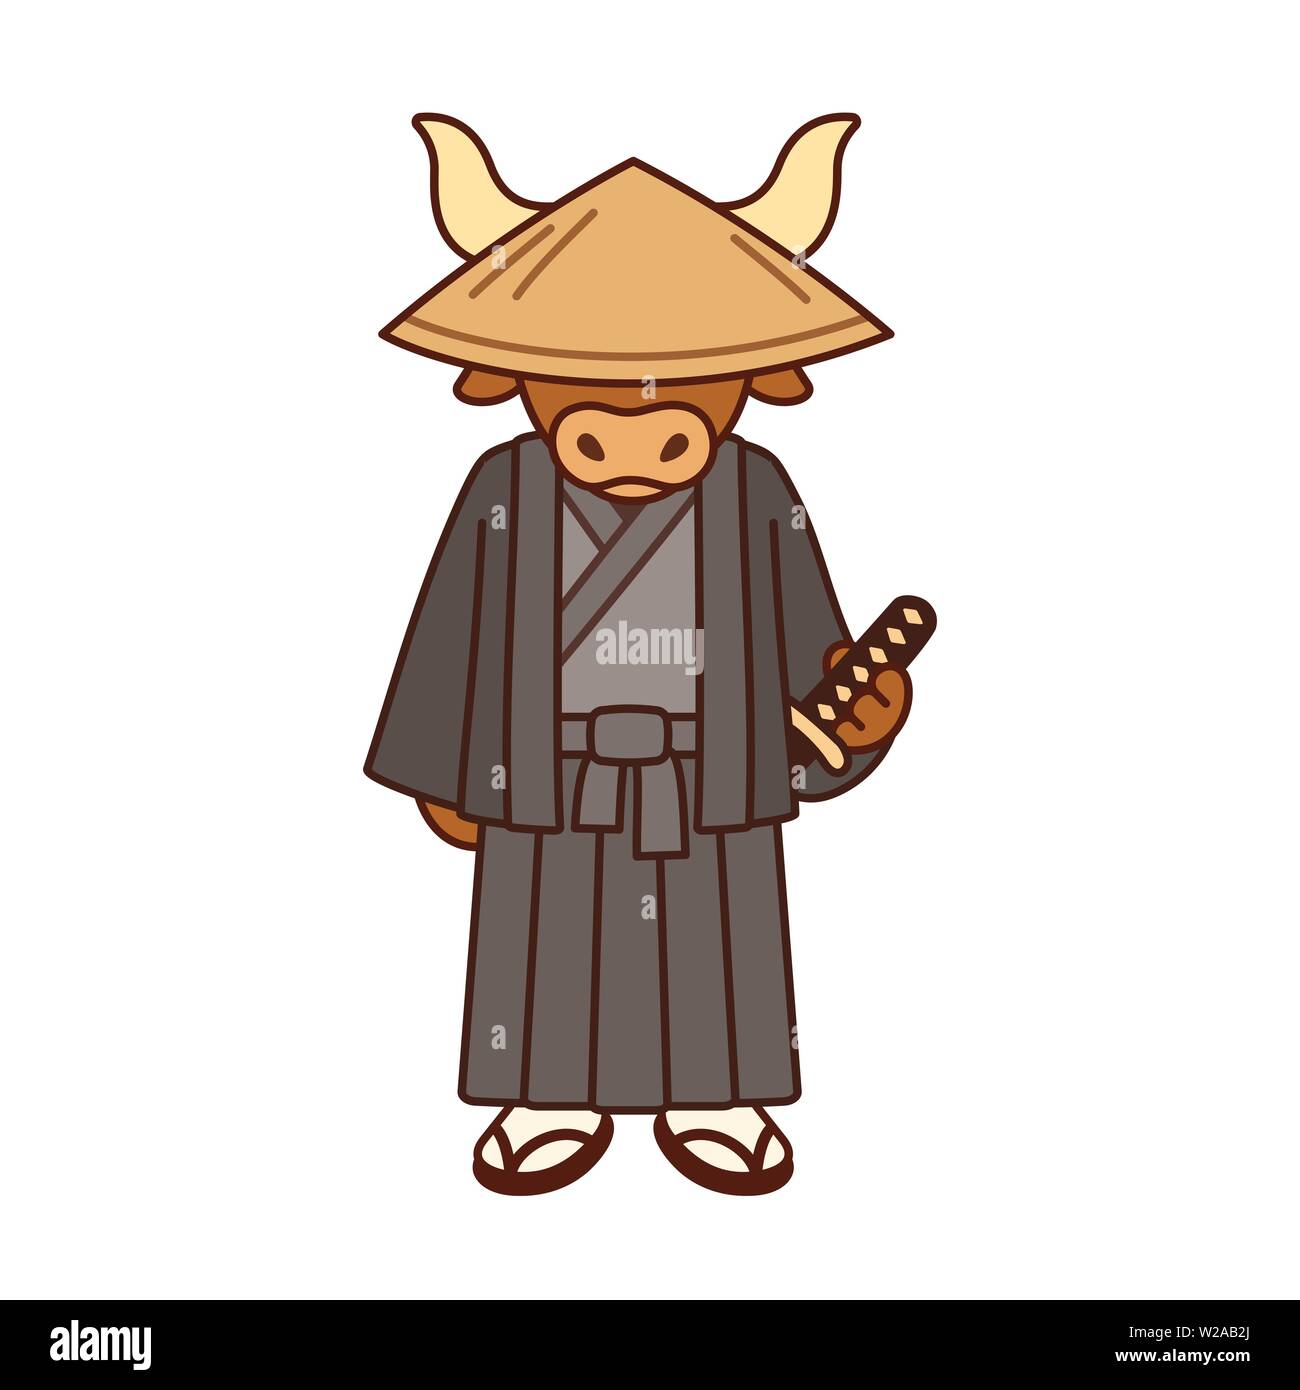 Cute cartoon buffalo samurai. Funny Japanese samurai animal character in kimono and straw hat, with traditional katana sword. Stock Vector